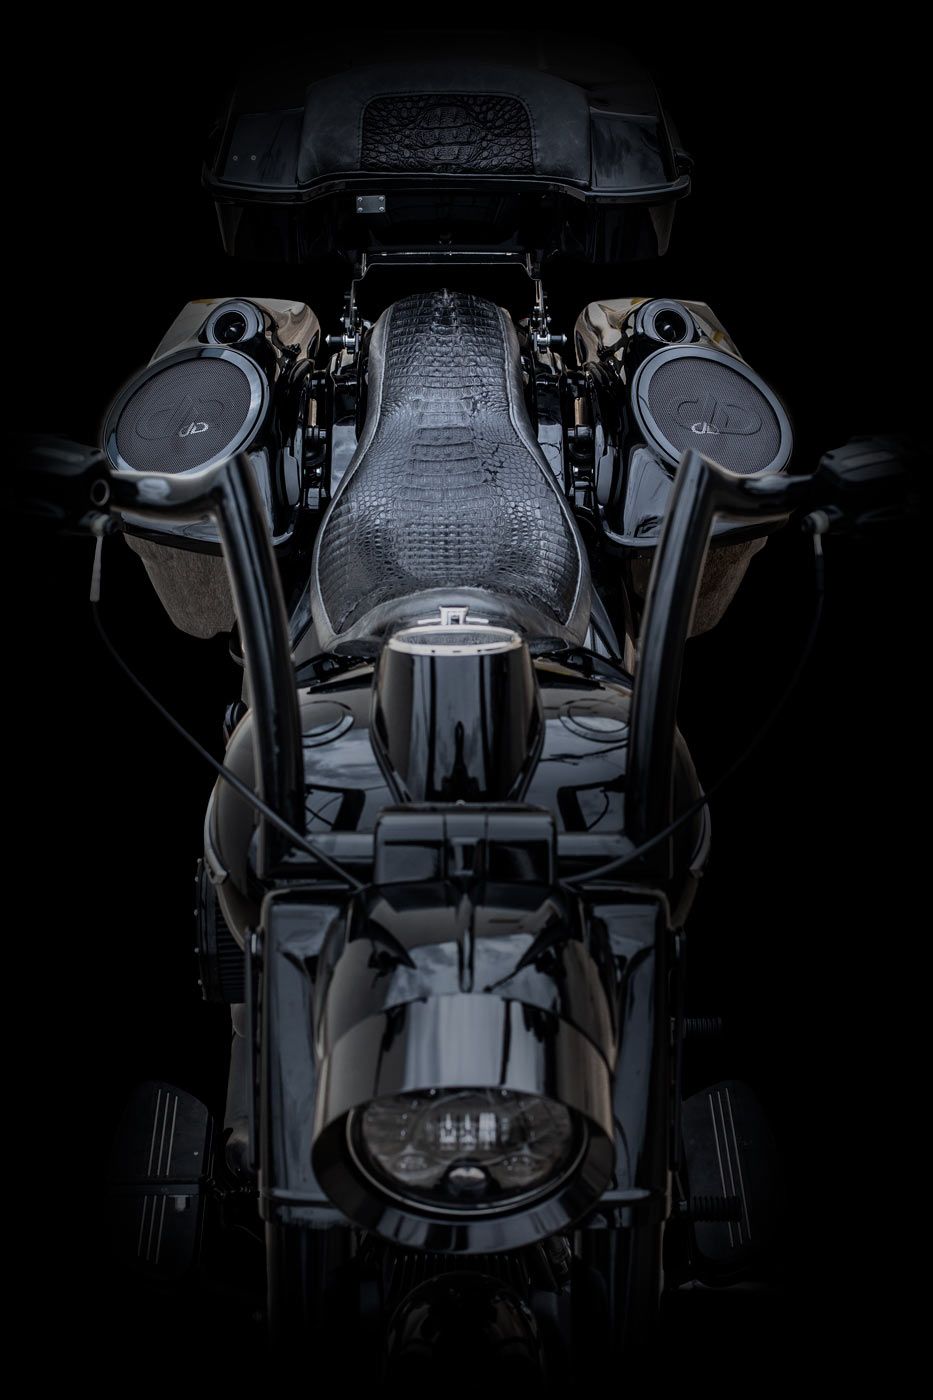 Superior motorcycle audio harley top view